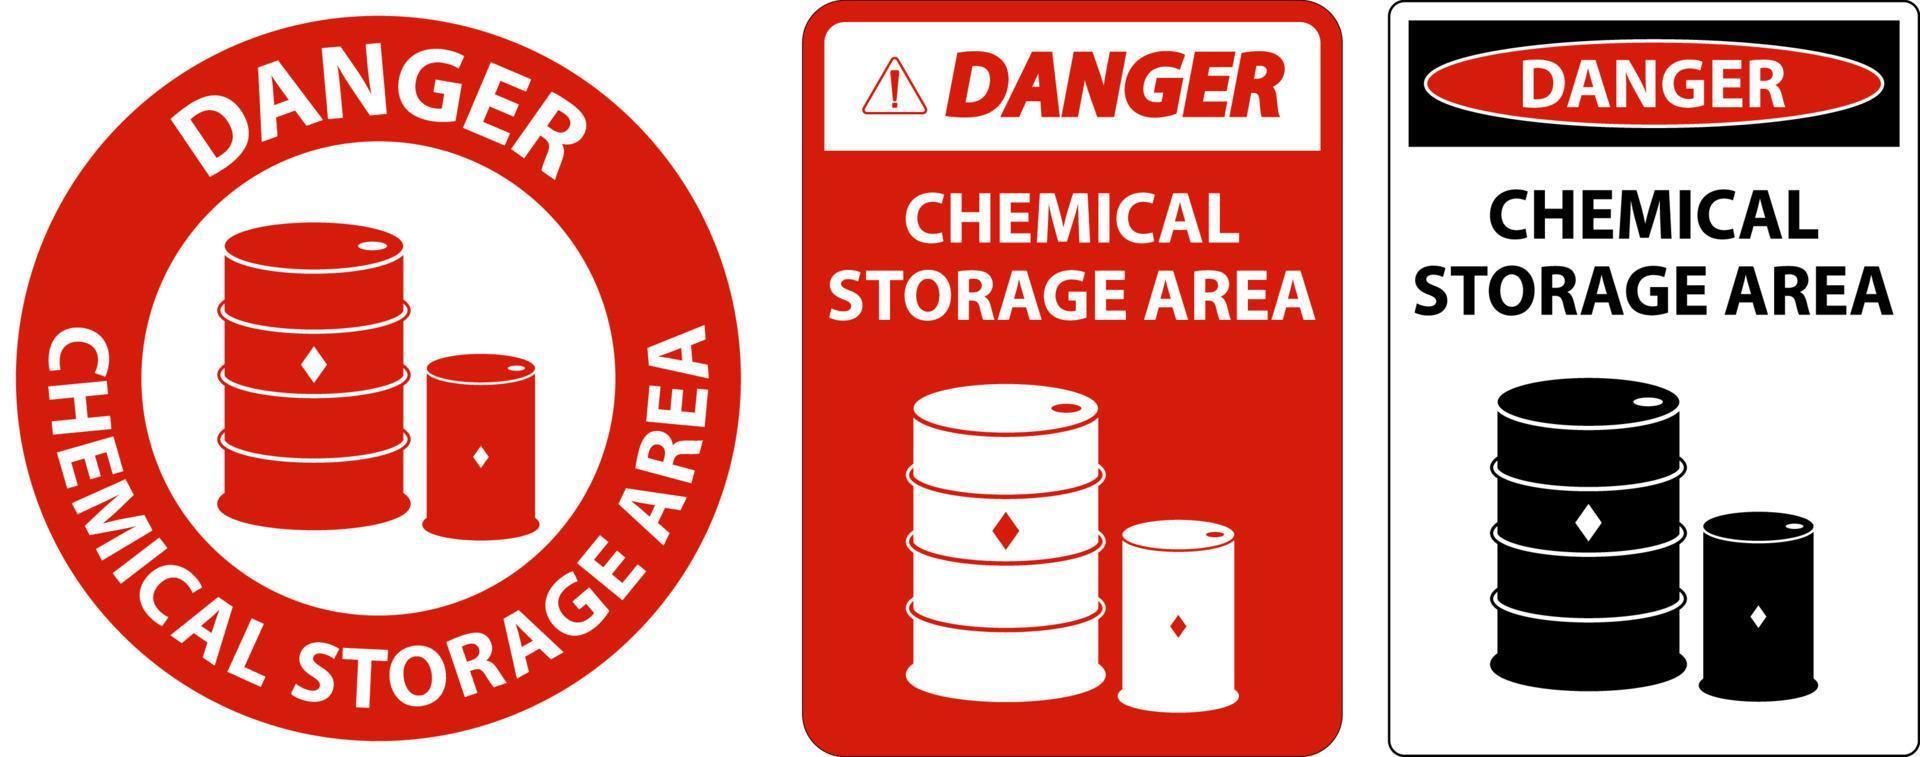 sinal de área de armazenamento de produtos químicos de perigo no fundo branco vetor